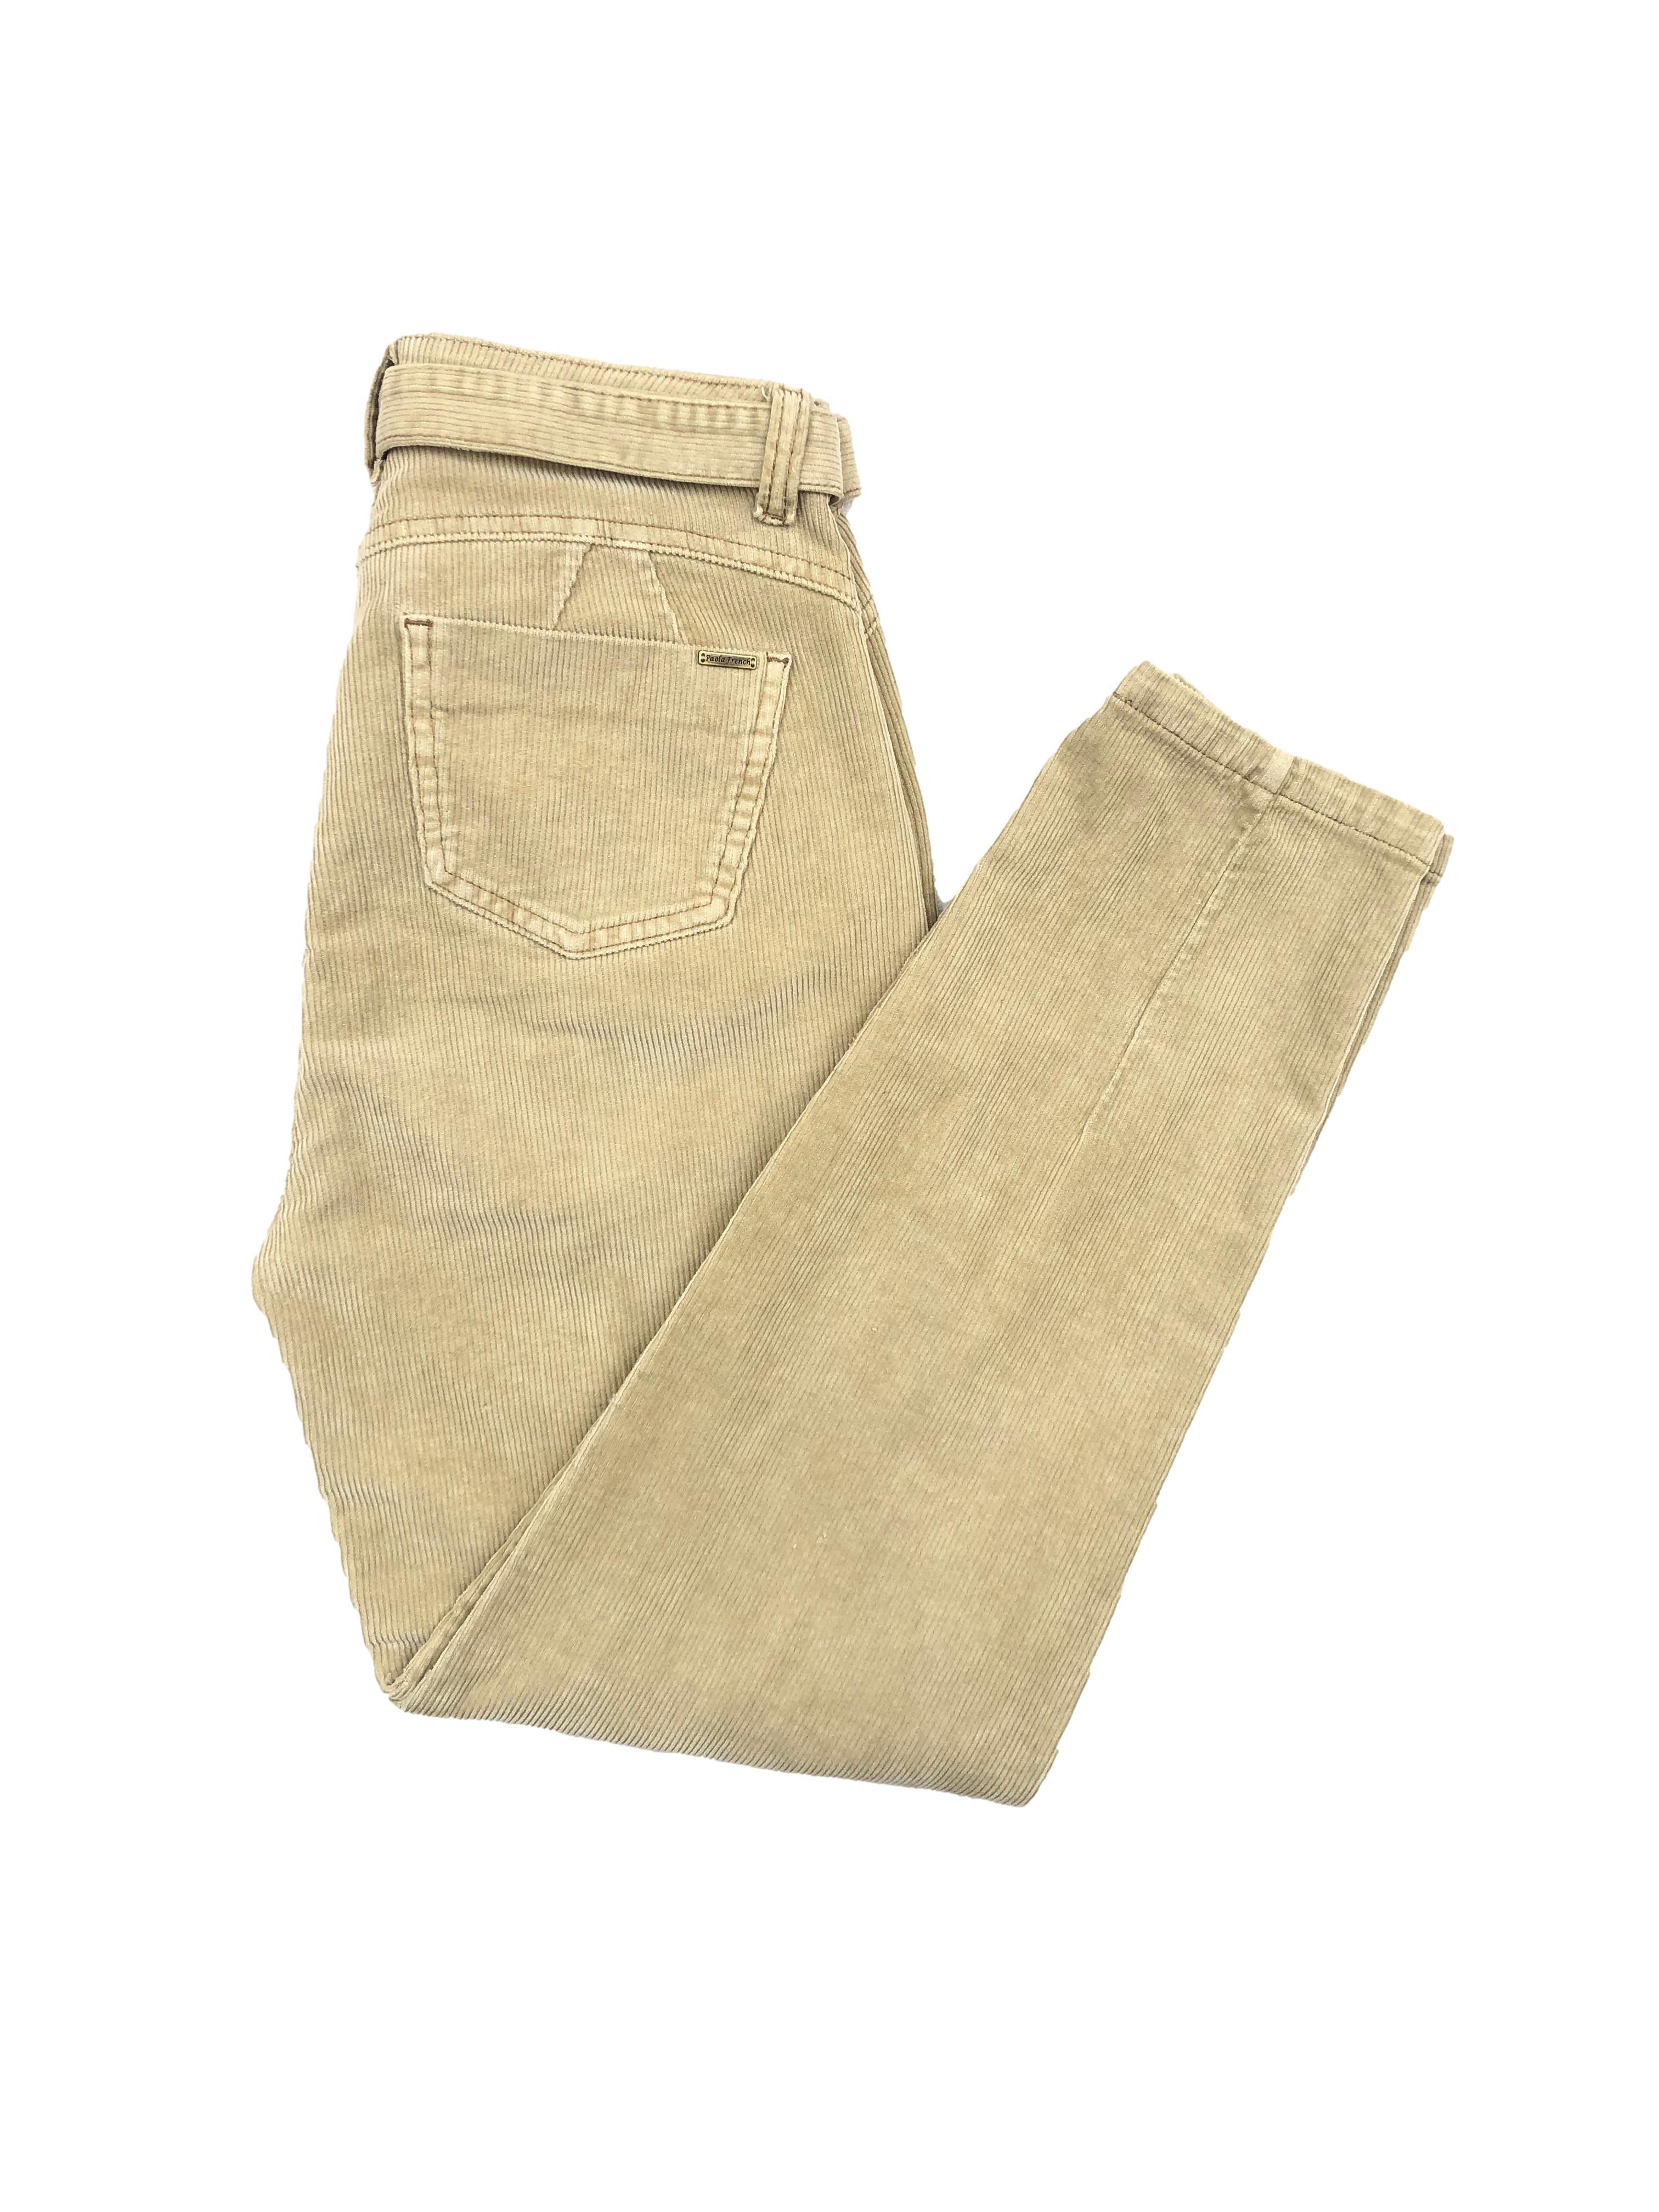 Pantalón beige de corduroy Paola French con bolsillos, cinturón de tela, pinzas en cintura y botapié. Cintura 66cm, Tiro 28cm, Largo 95cm.